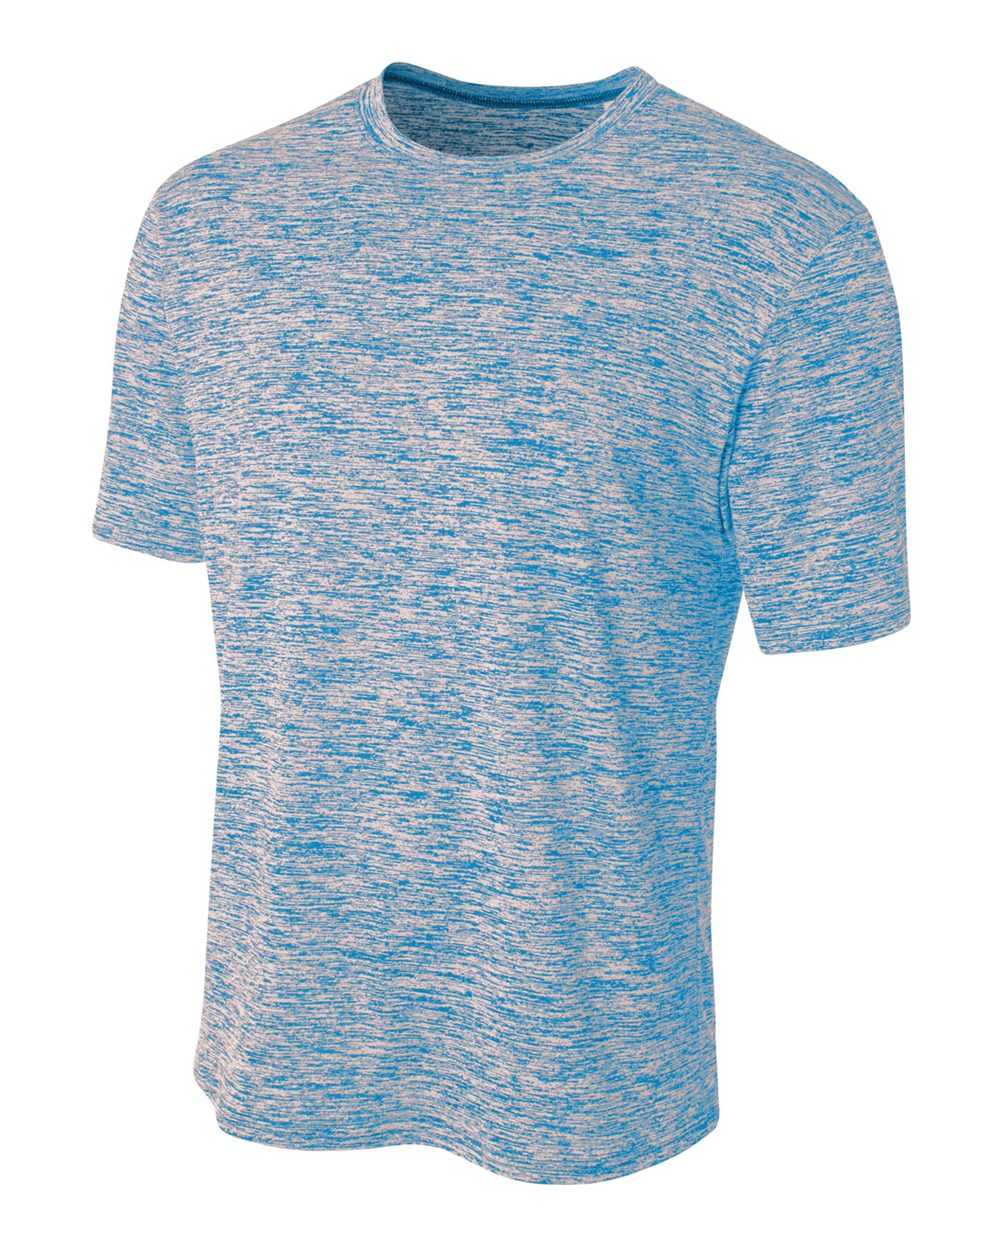 A4 N3296 Space Dye Tech Shirt - Light Blue - HIT a Double